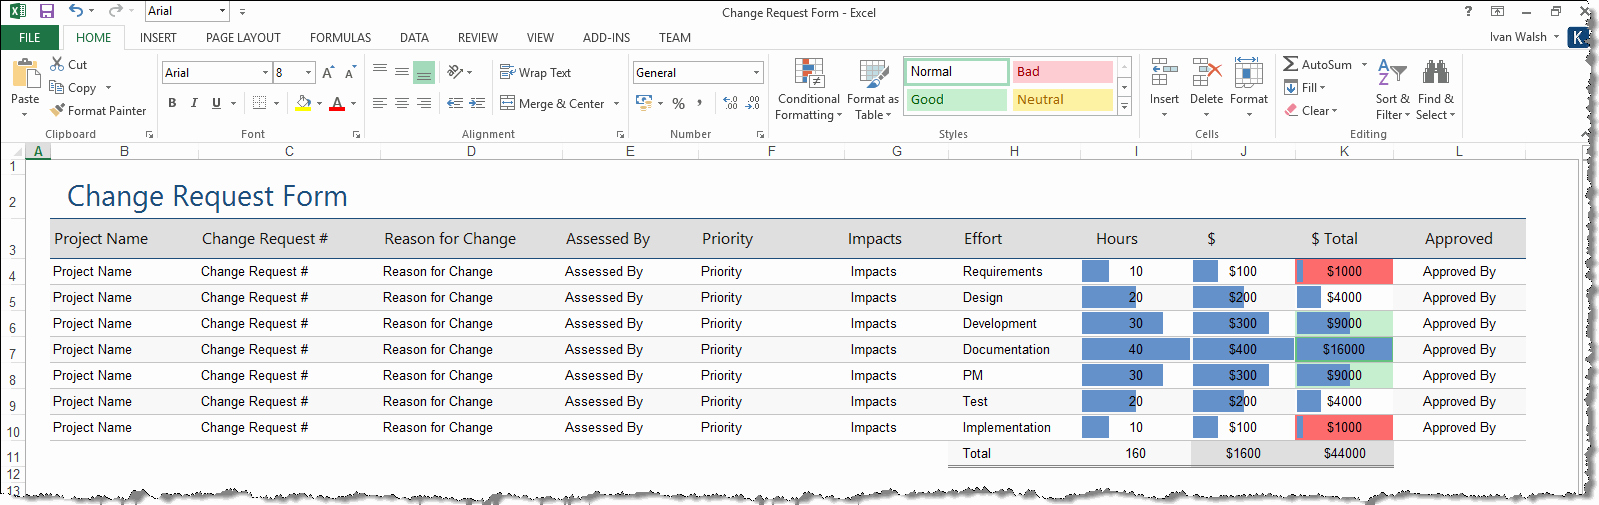 Change Management Template Excel Fresh Change Management Plan – Download Ms Word &amp; Excel Templates